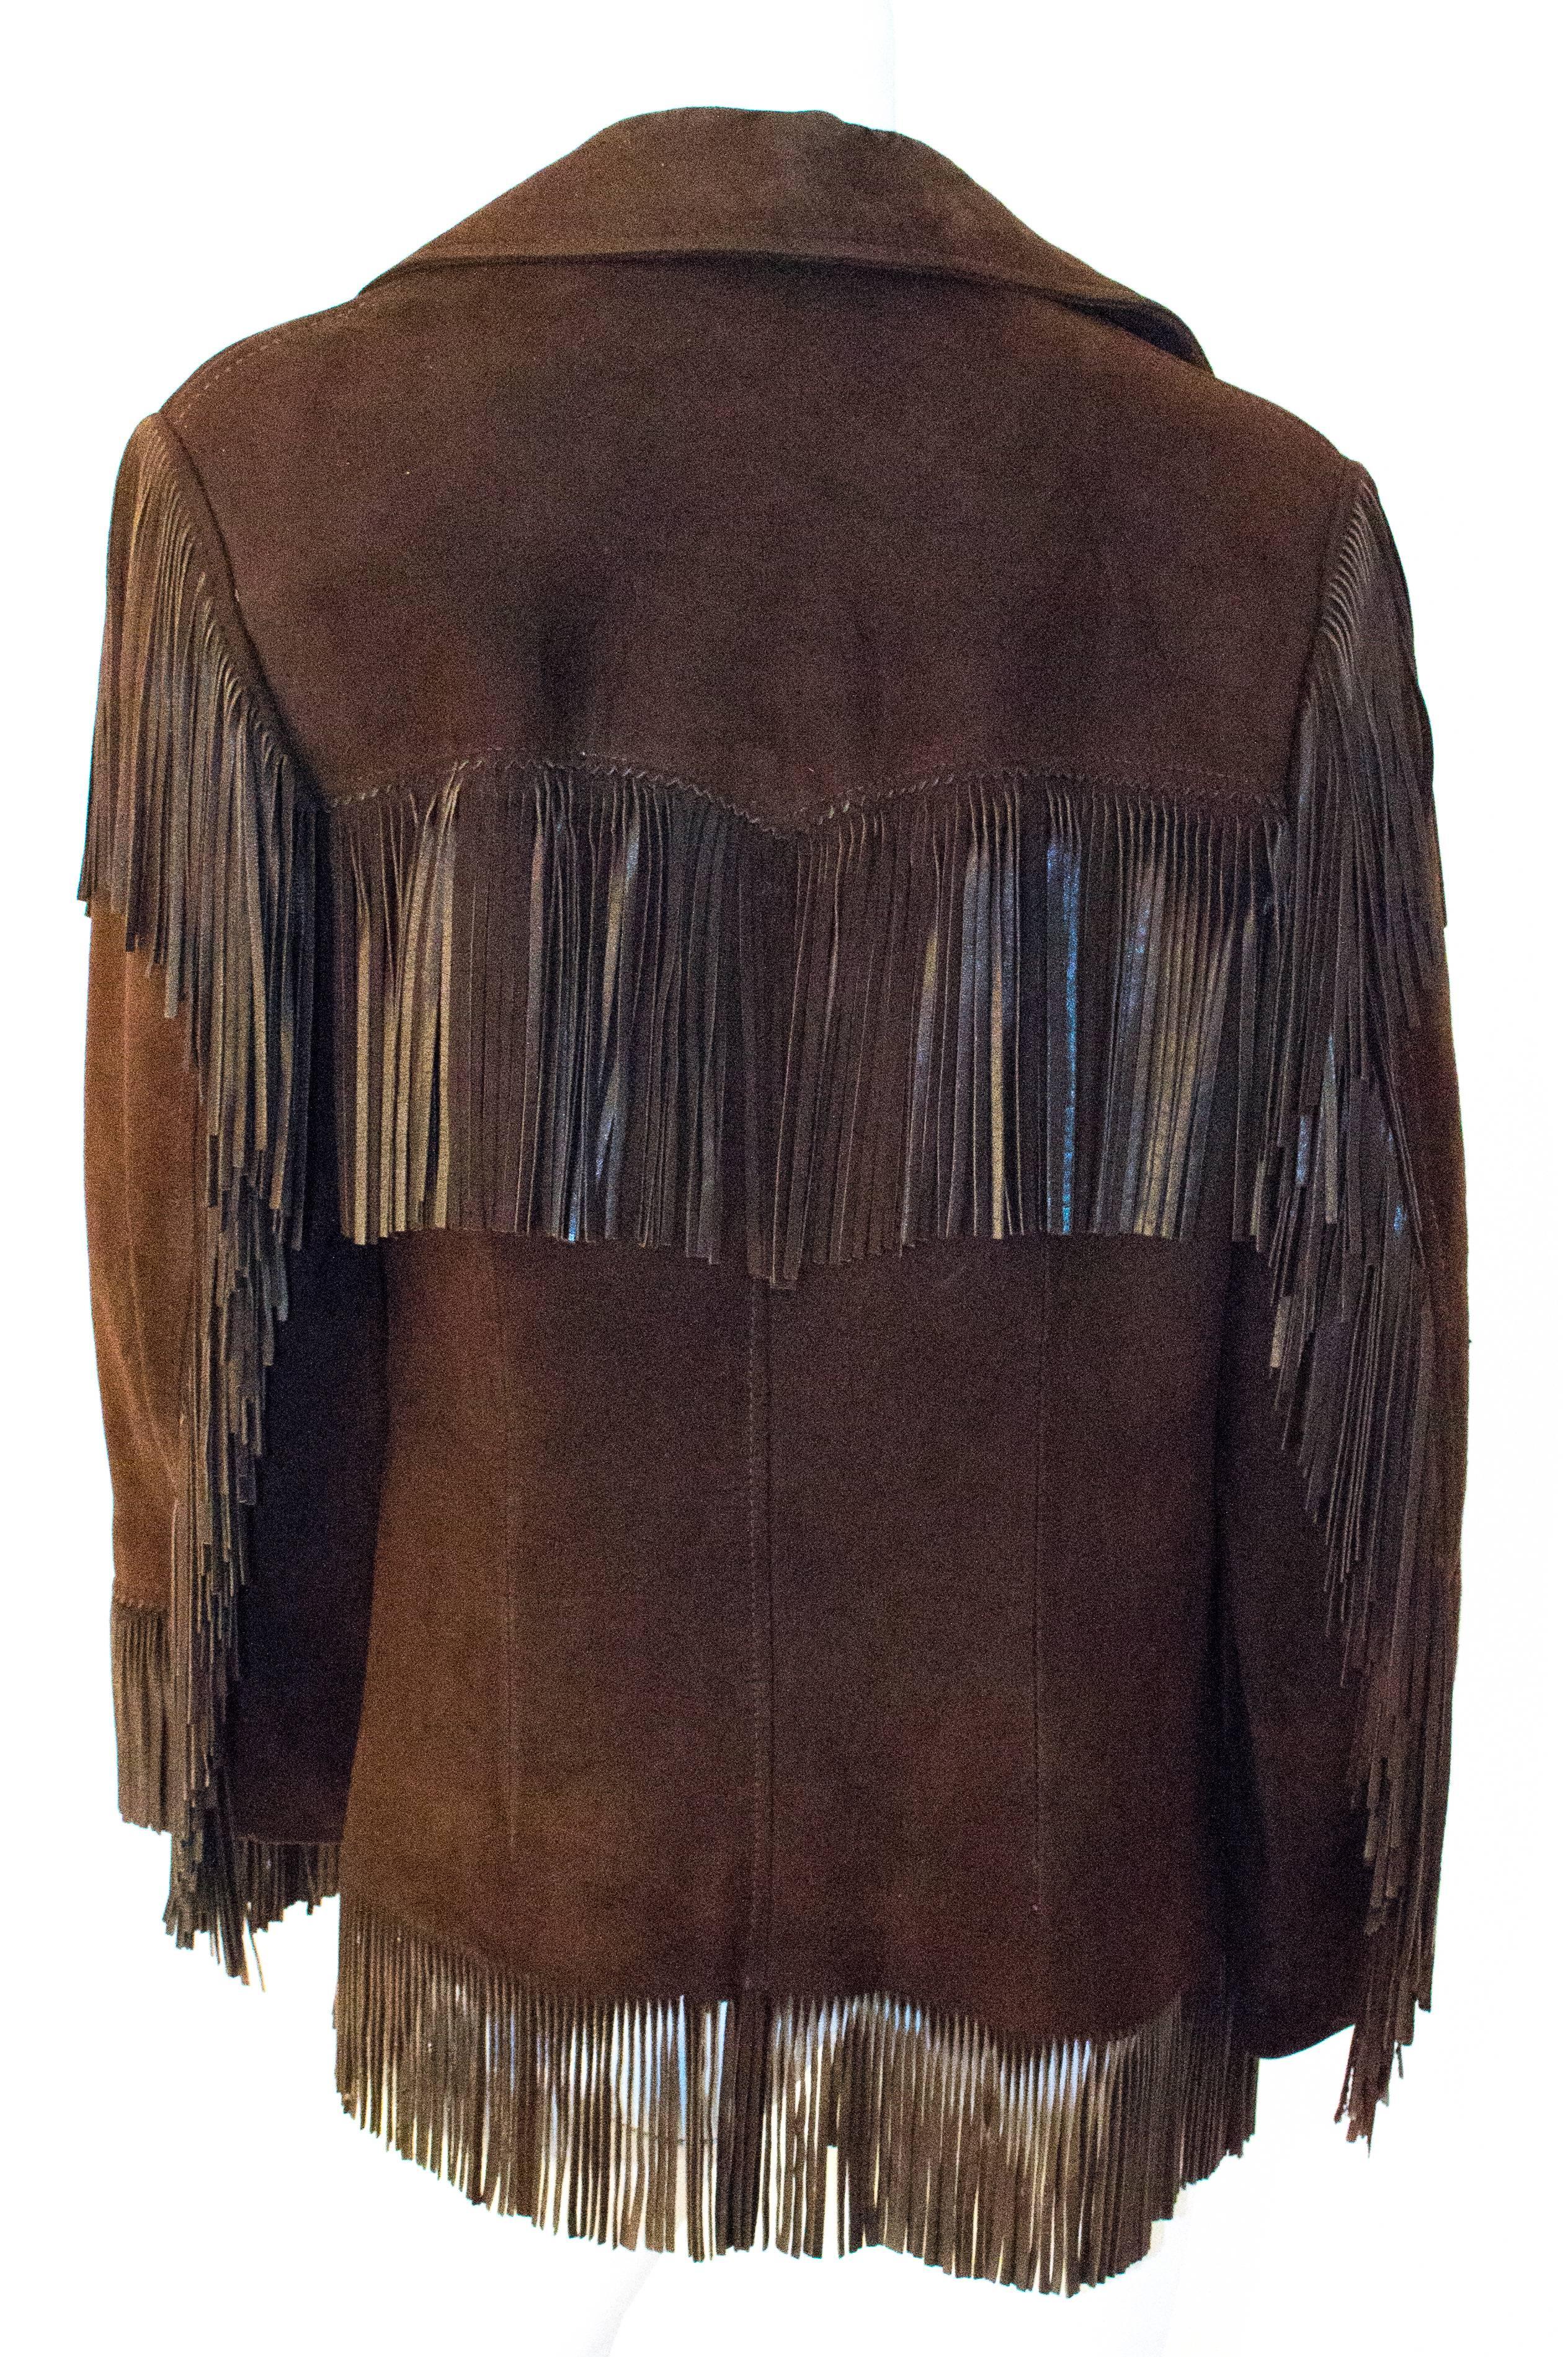 70s Dark Brown Suede Fringe Jacket. Two front pockets. Lined. 